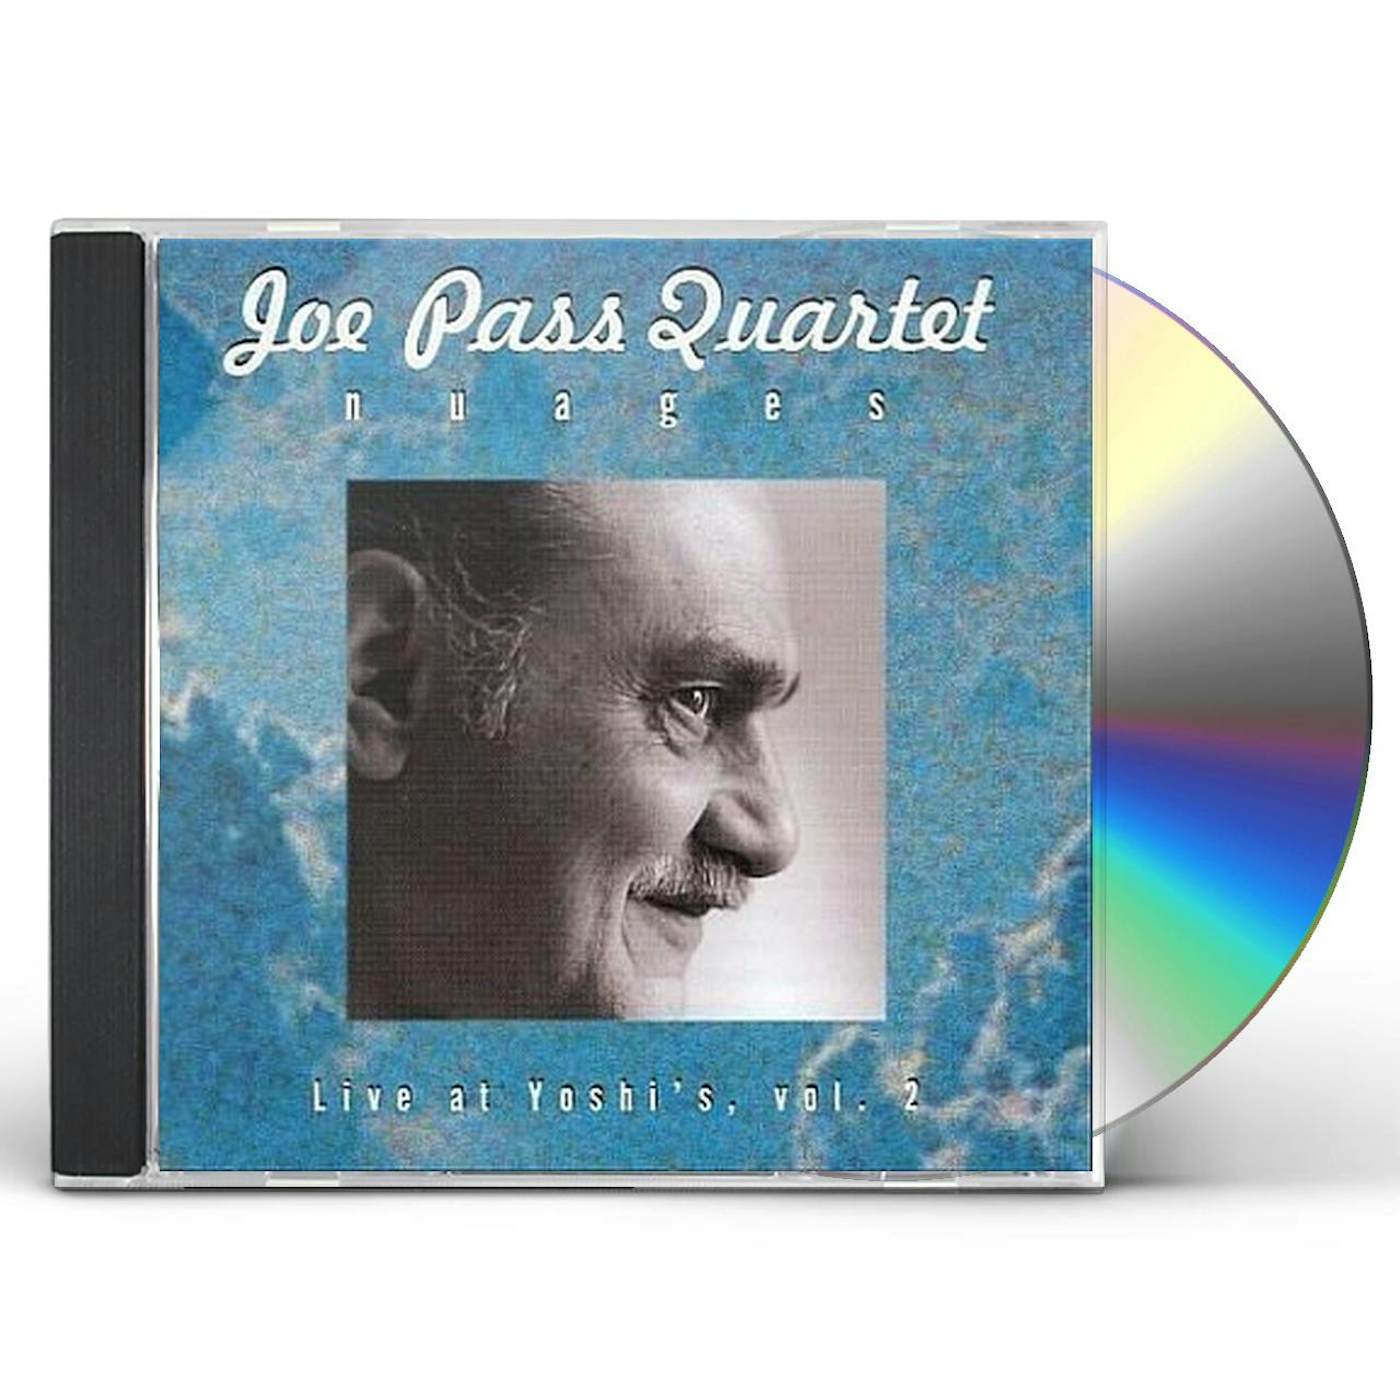 Joe Pass CLOUDS CD